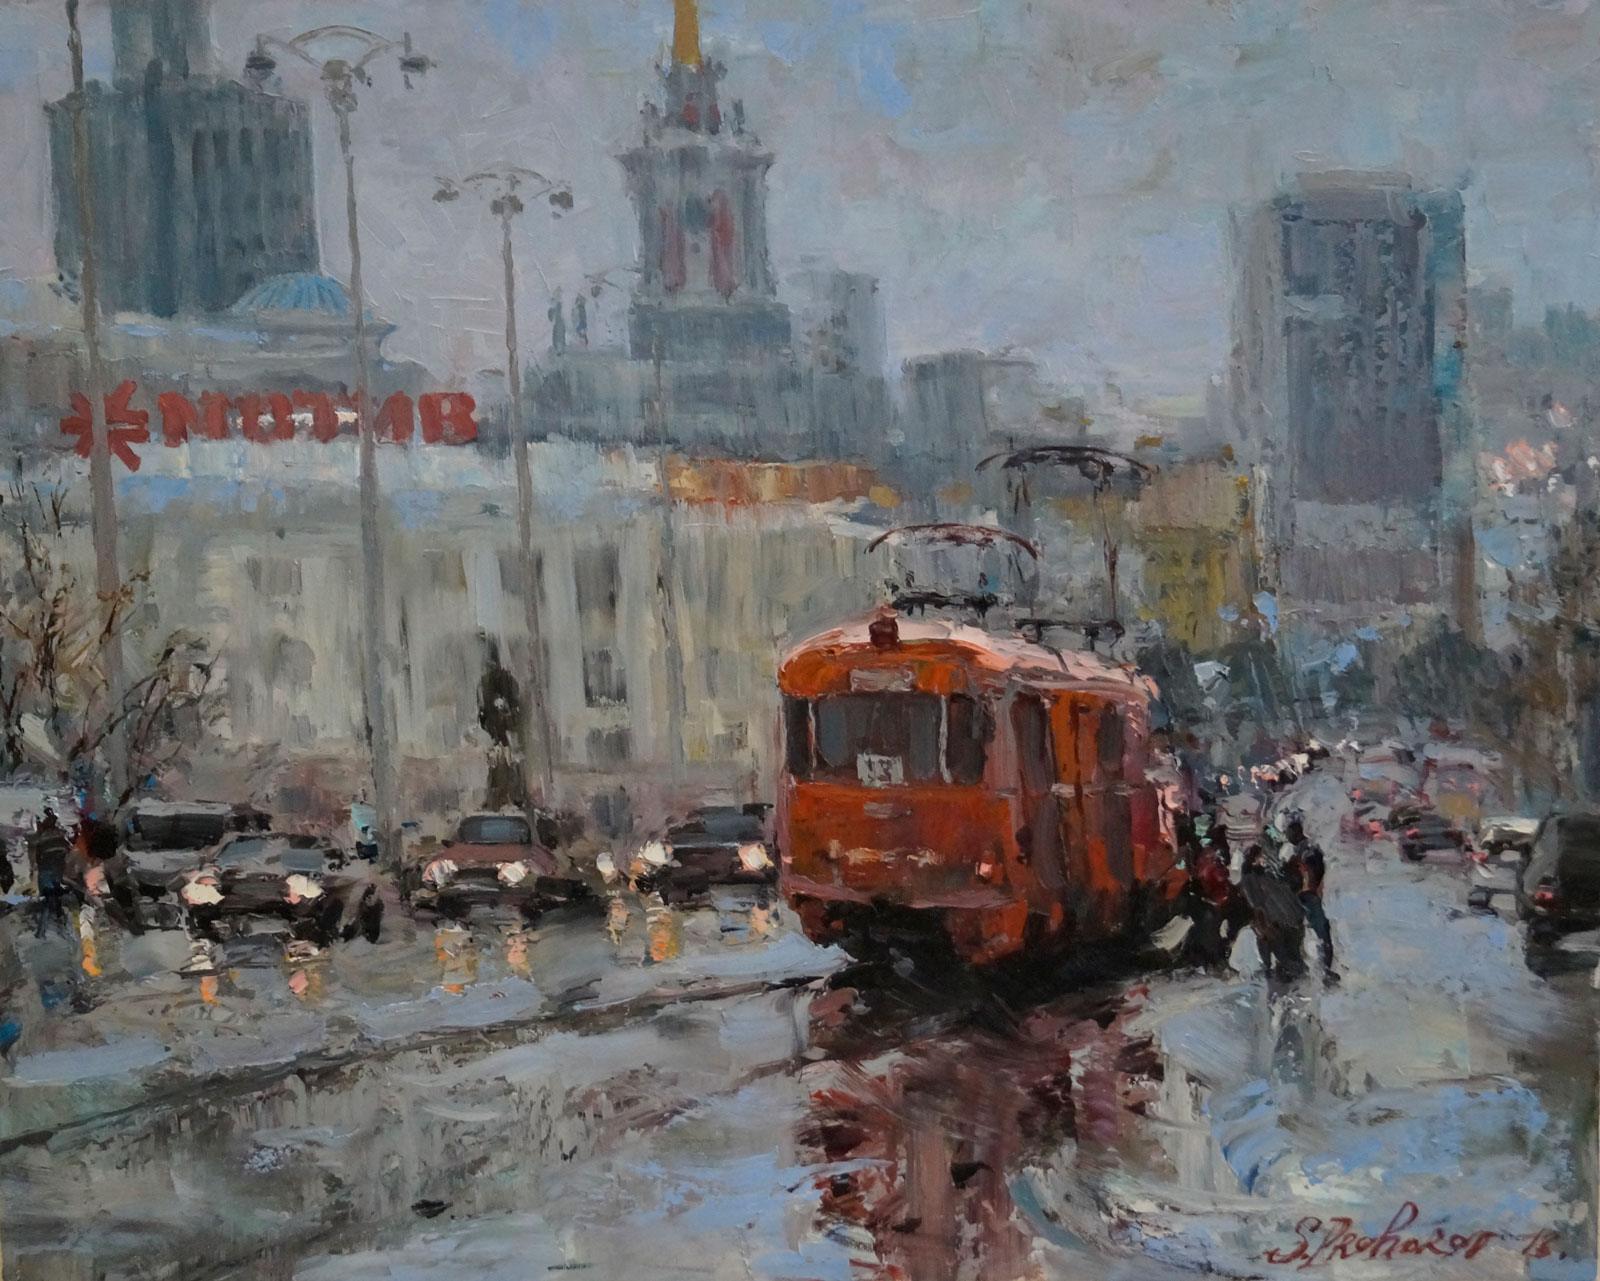 Motive - 1, Sergei Prokhorov, Buy the painting Oil